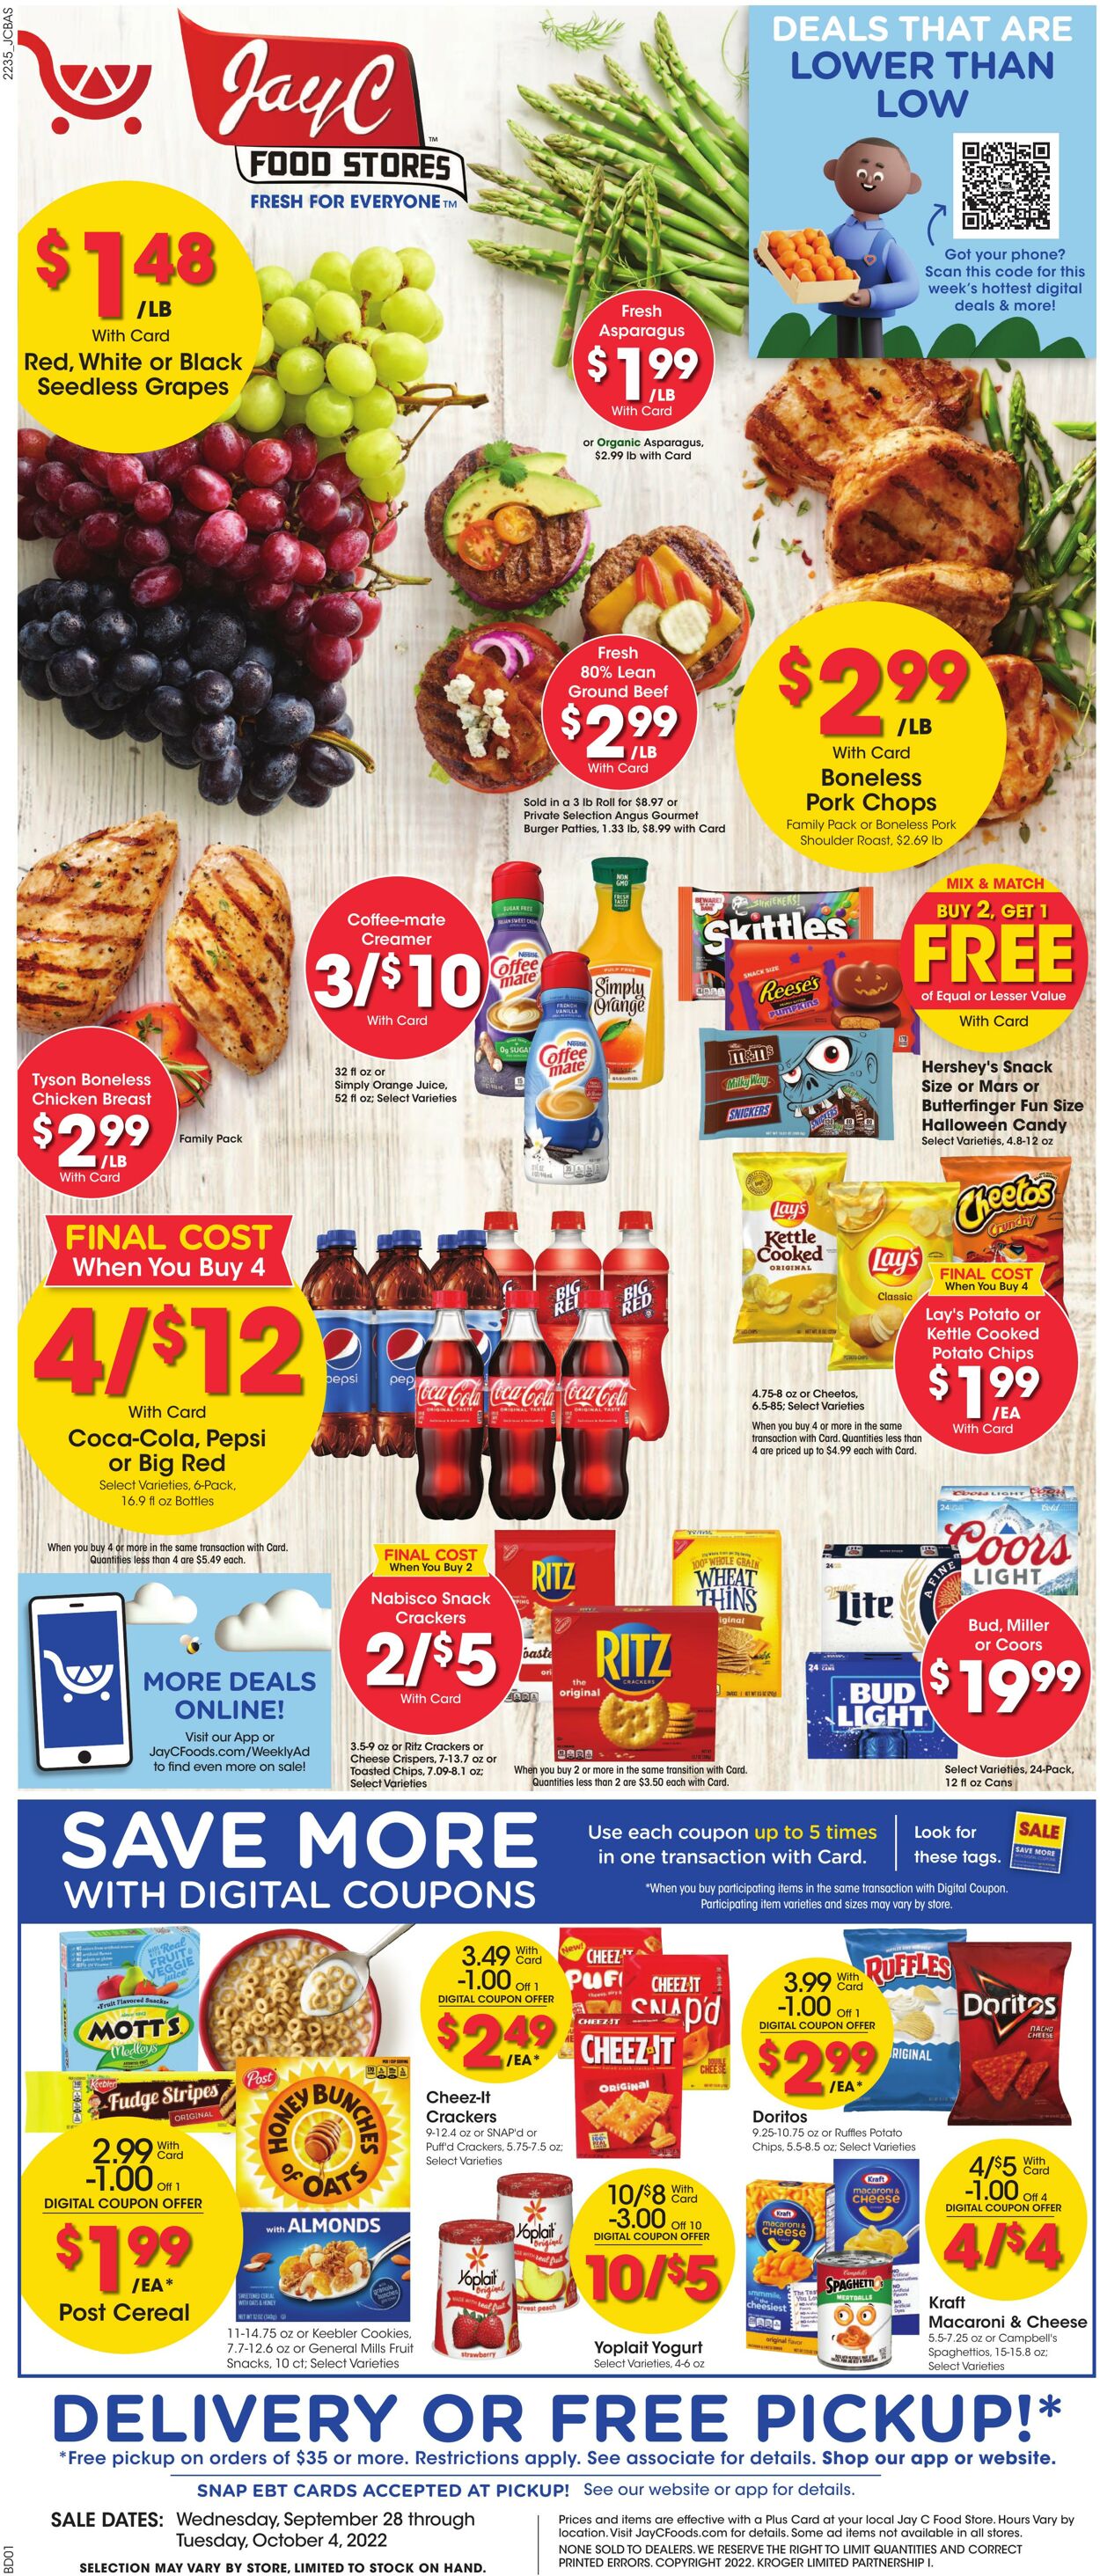 Weekly ad JayC Food Stores 09/28/2022 - 10/04/2022